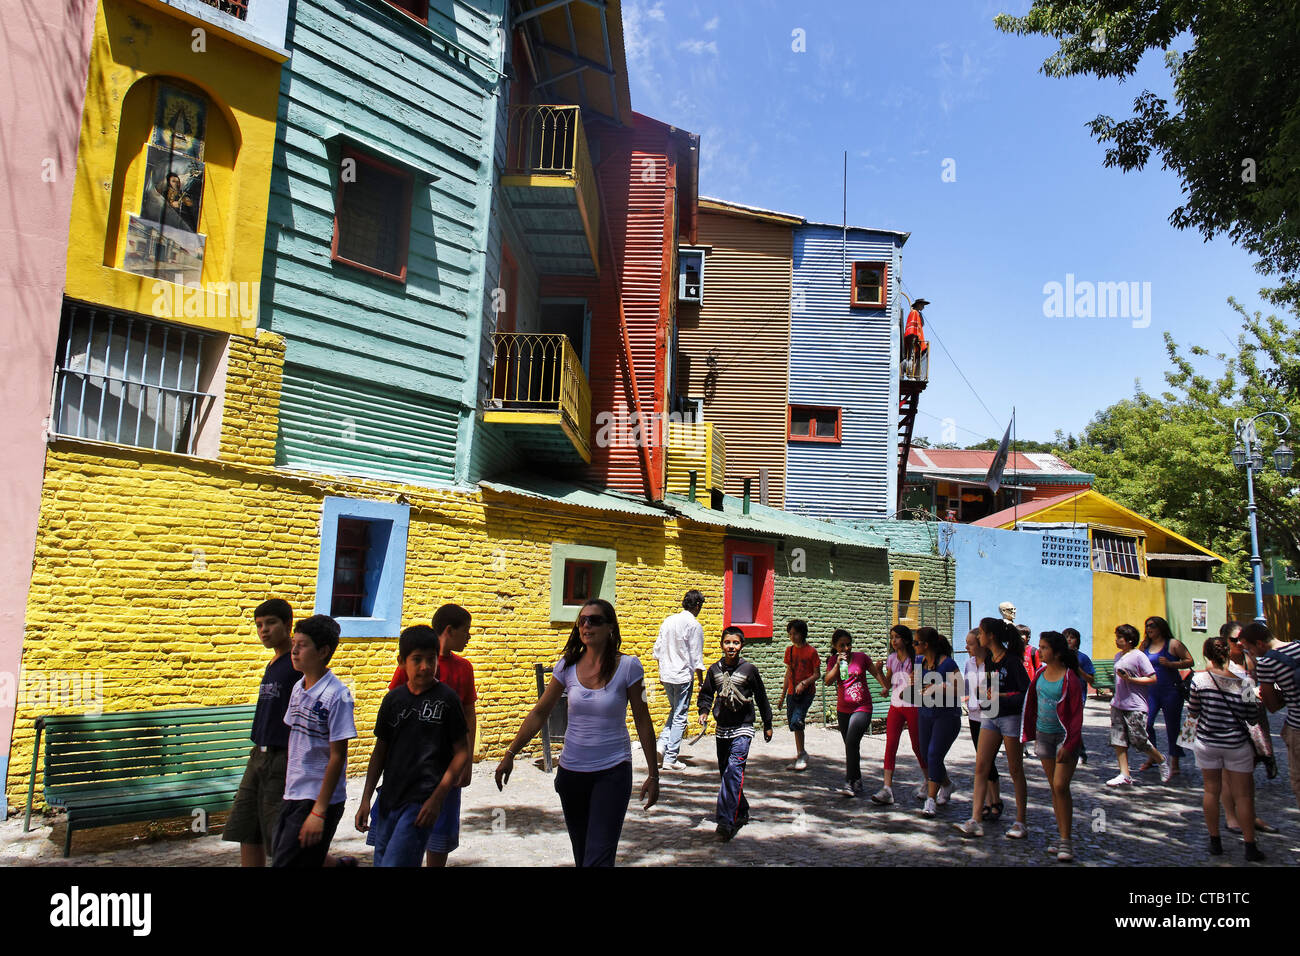 Colorful Houses in Caminito, La Boca, Buenos Aires, Argentina Stock Photo